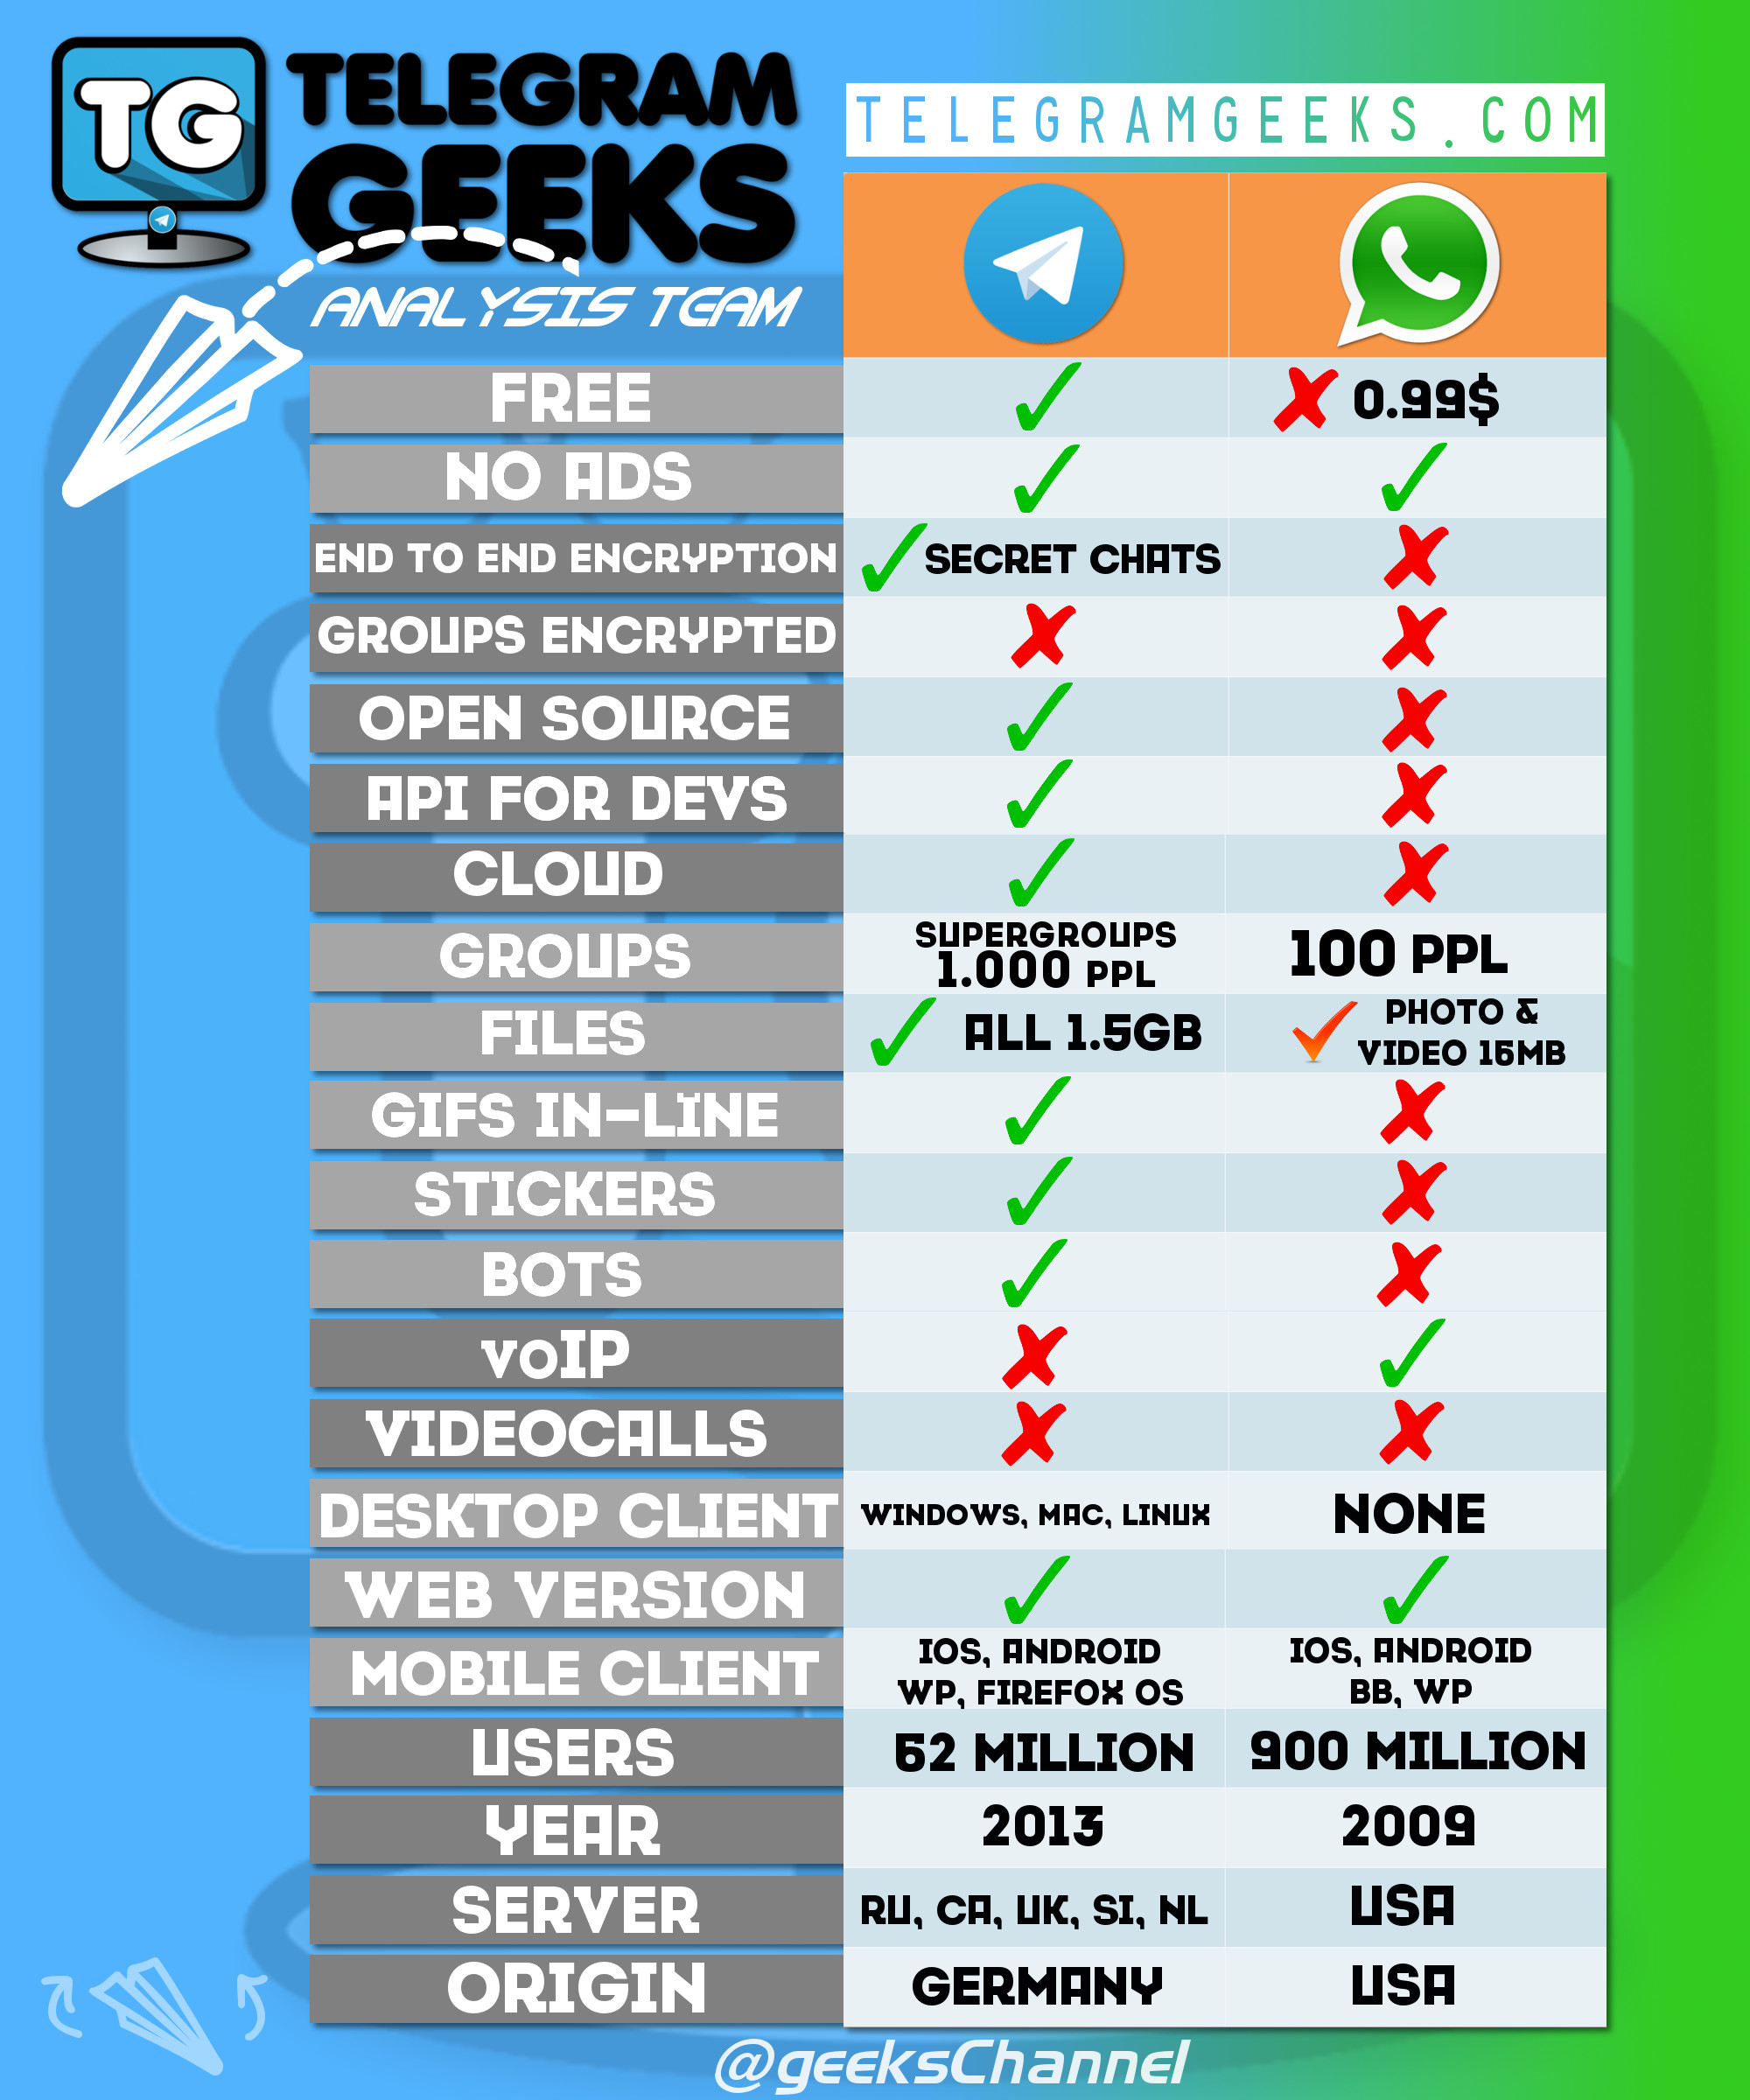 telegram-vs-whatsapp-telegram-geeks